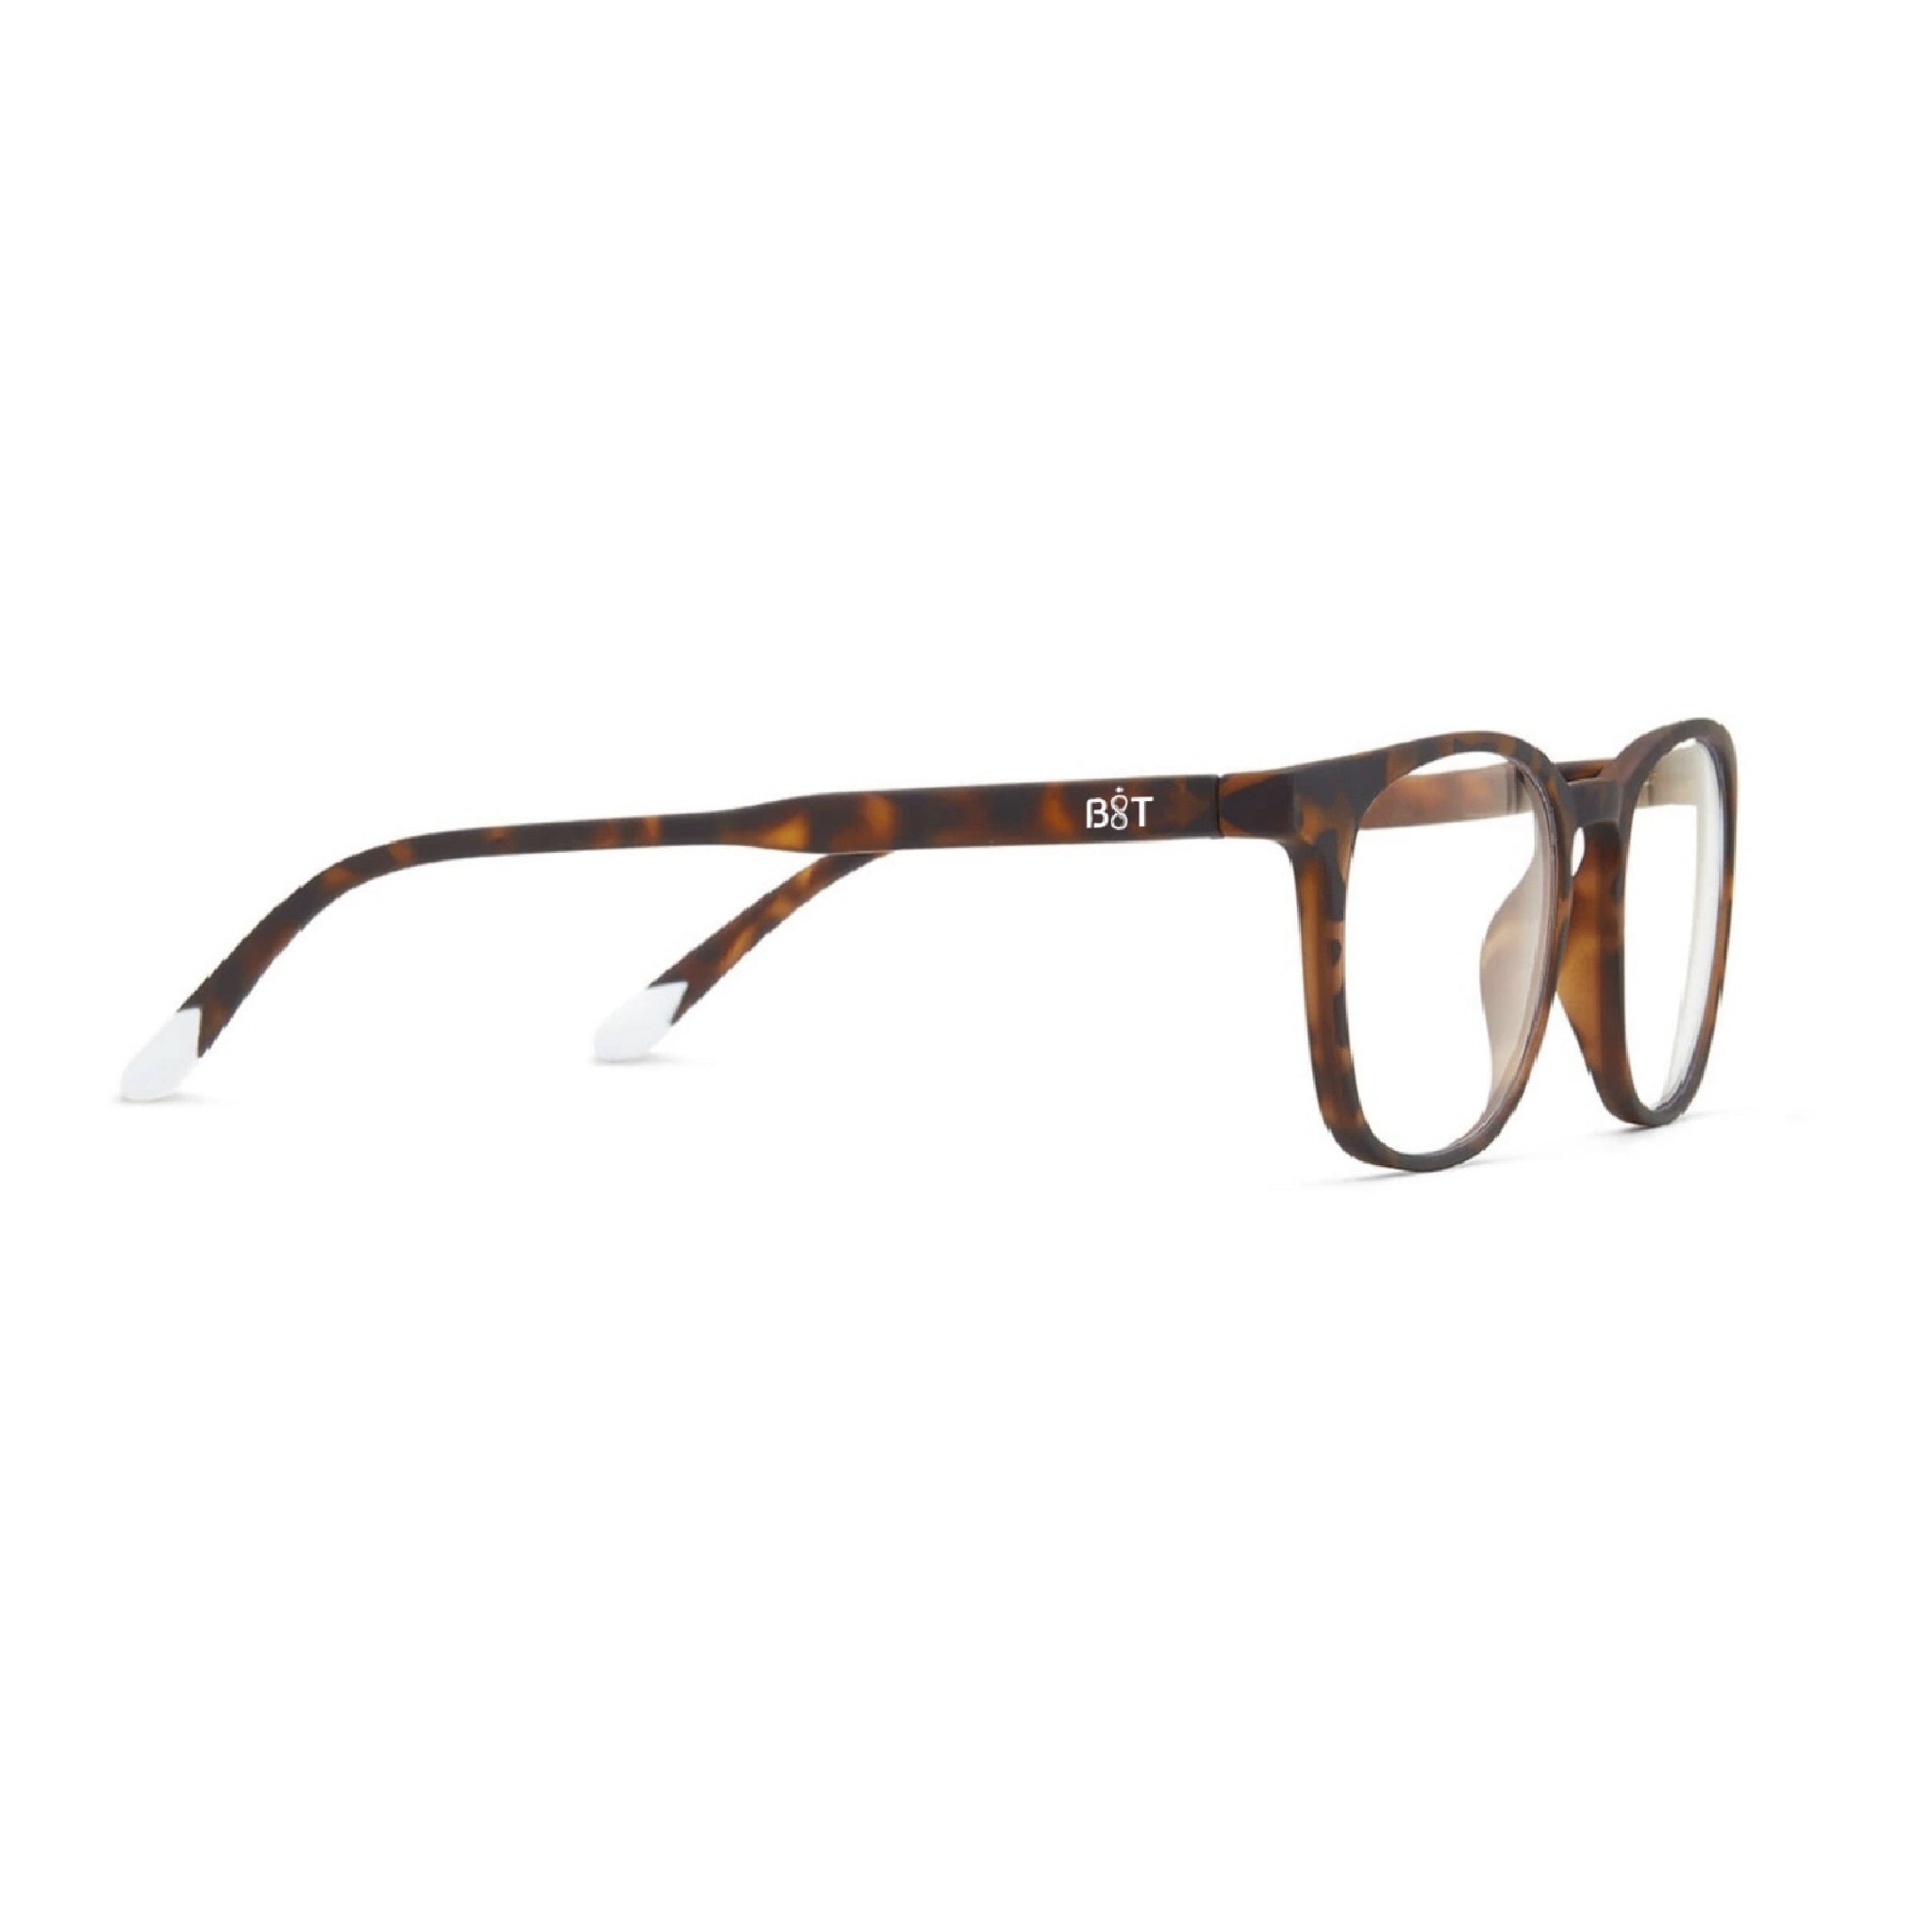 AmberArmor Eyewear - Computer Glasses